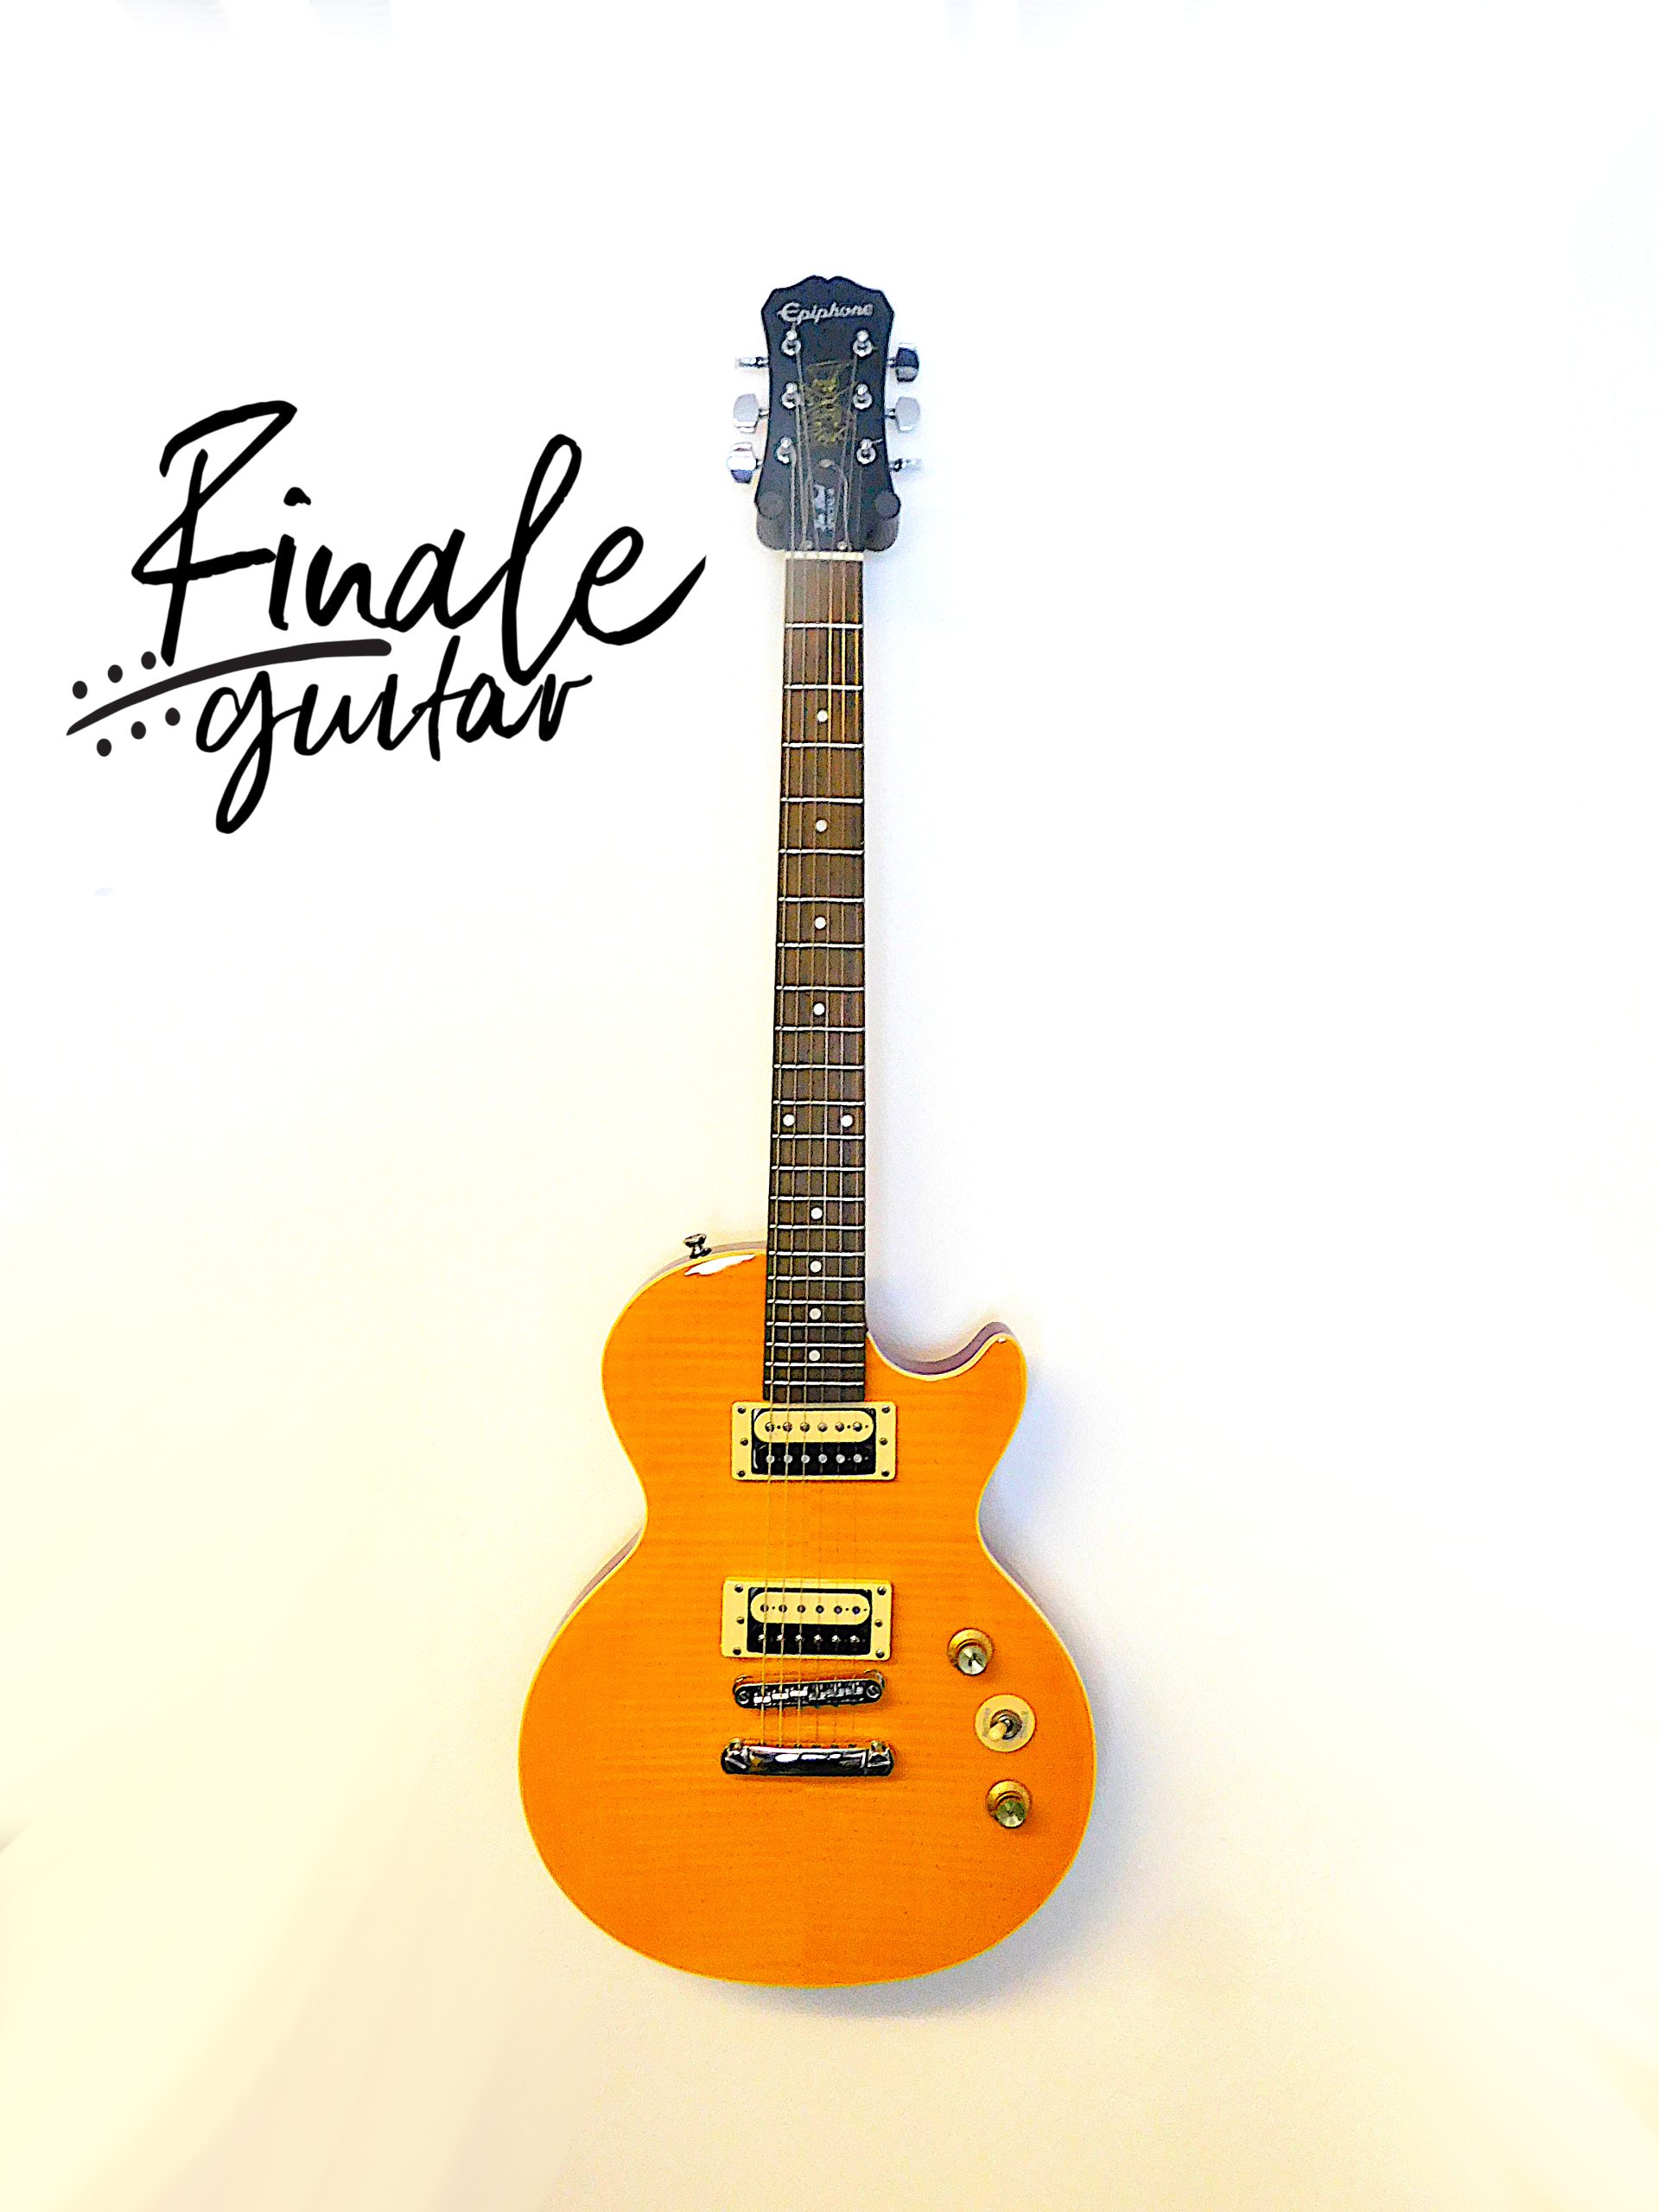 Epiphone Les Paul Special II Slash AFD Edition for sale in our Sheffield guitar shop, Finale Guitar